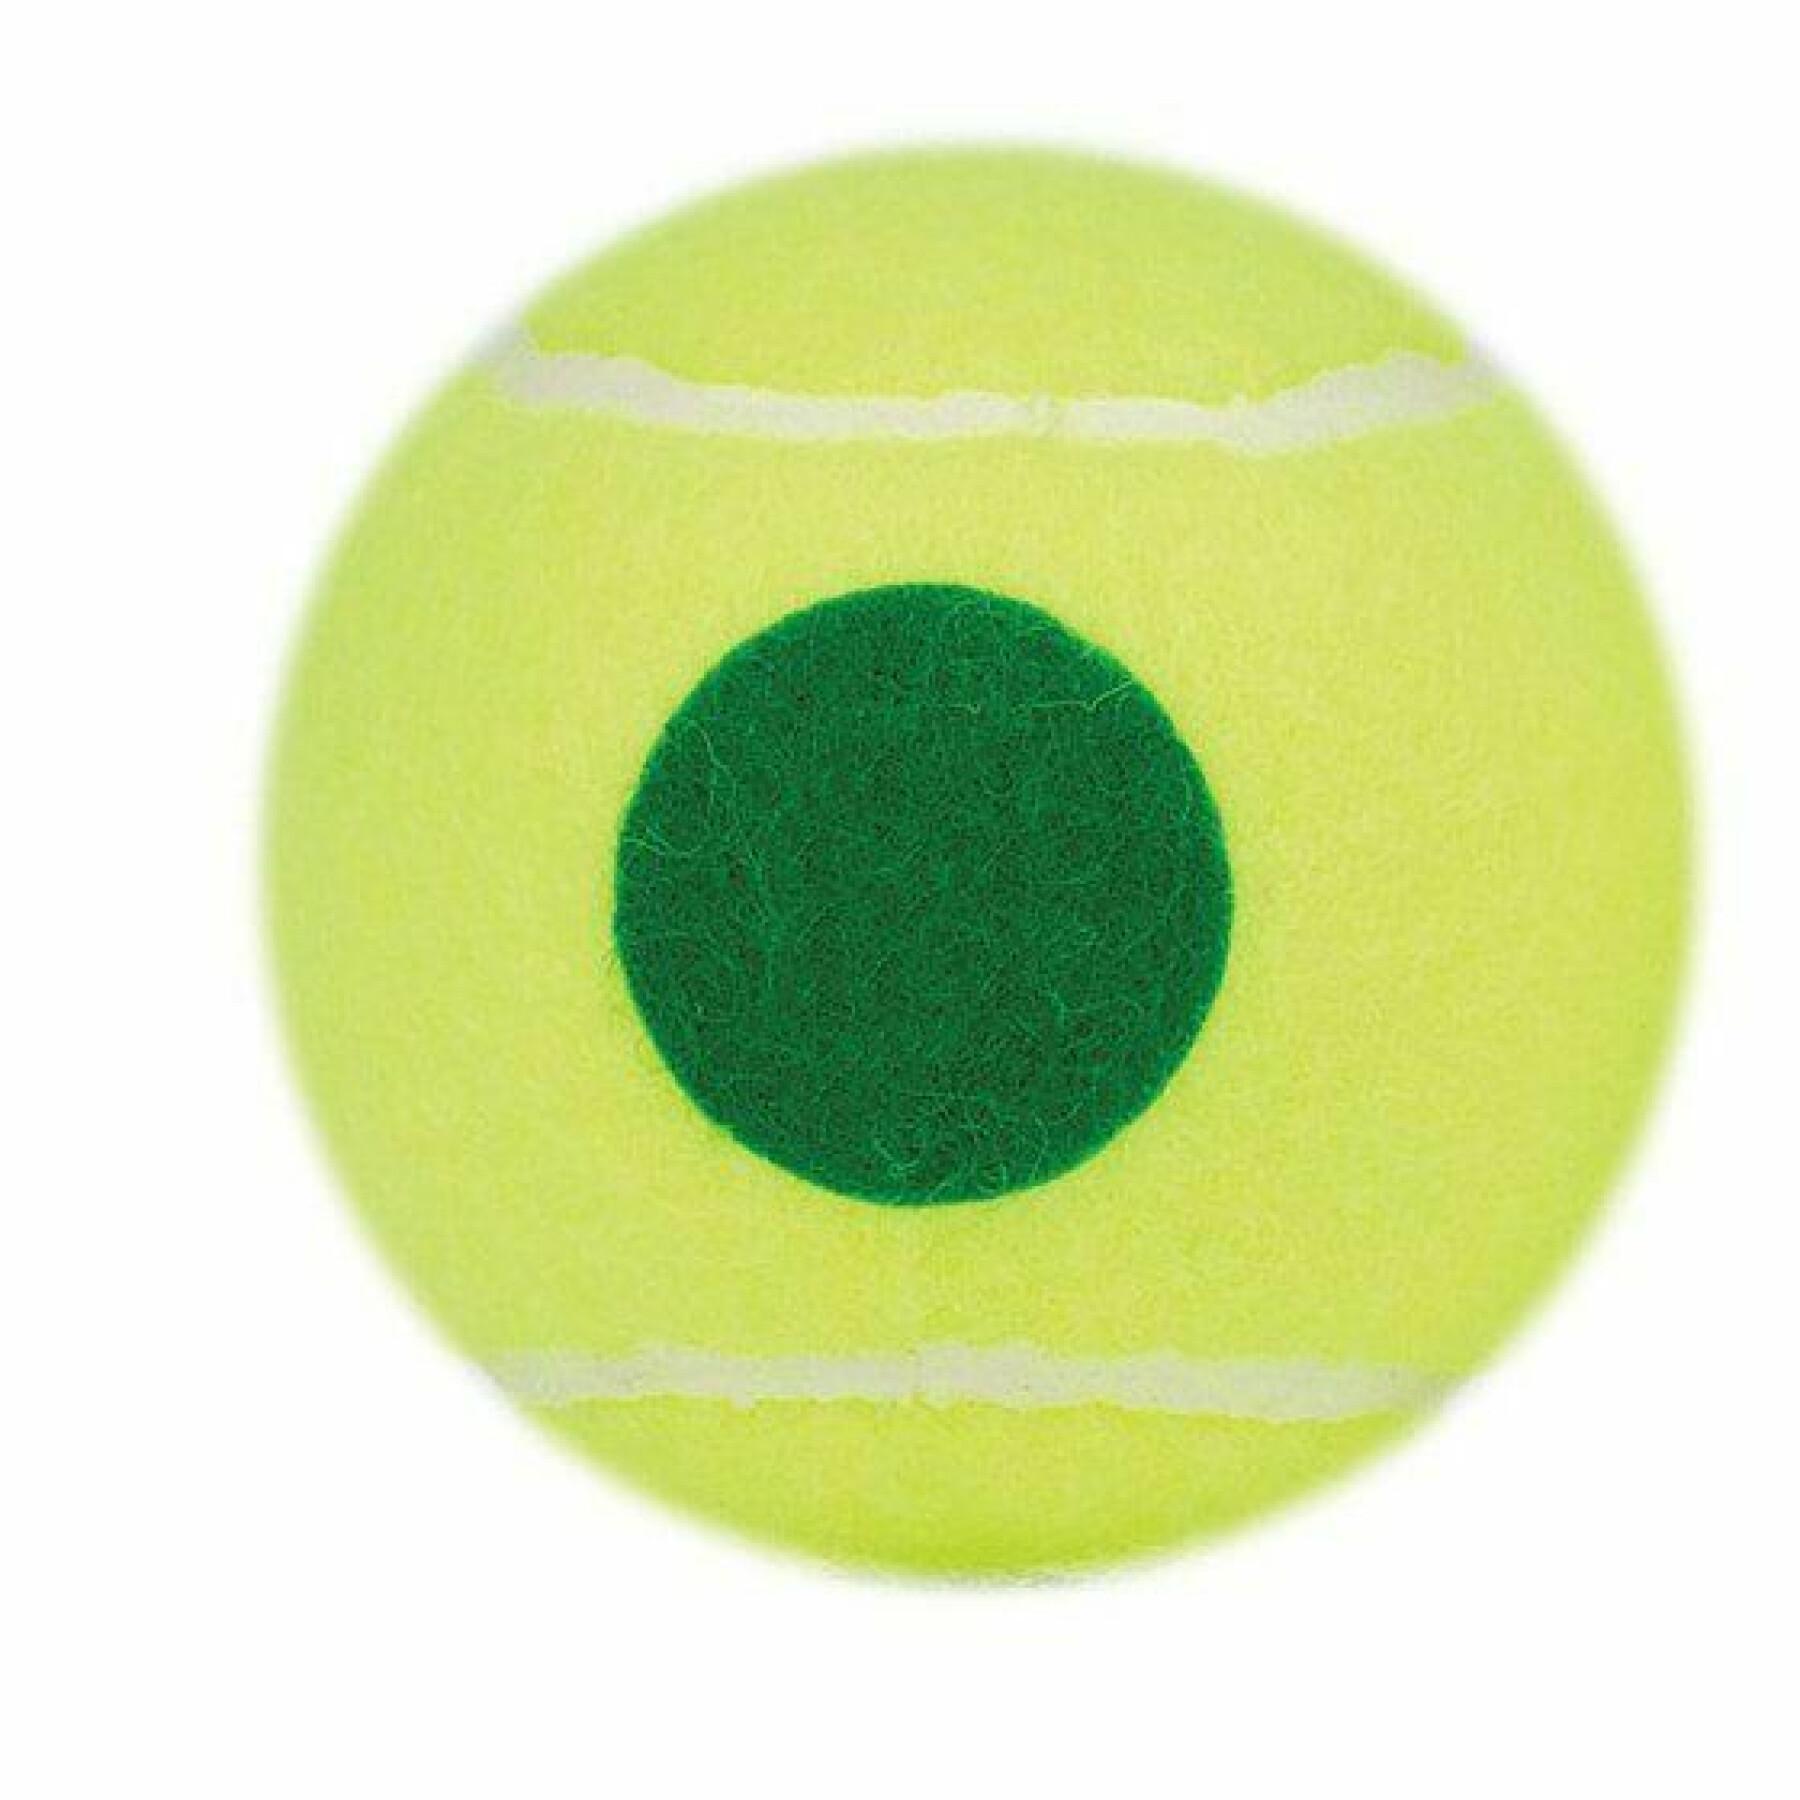 Sachet 72 balles de tennis Prince Play & Stay - stage 1